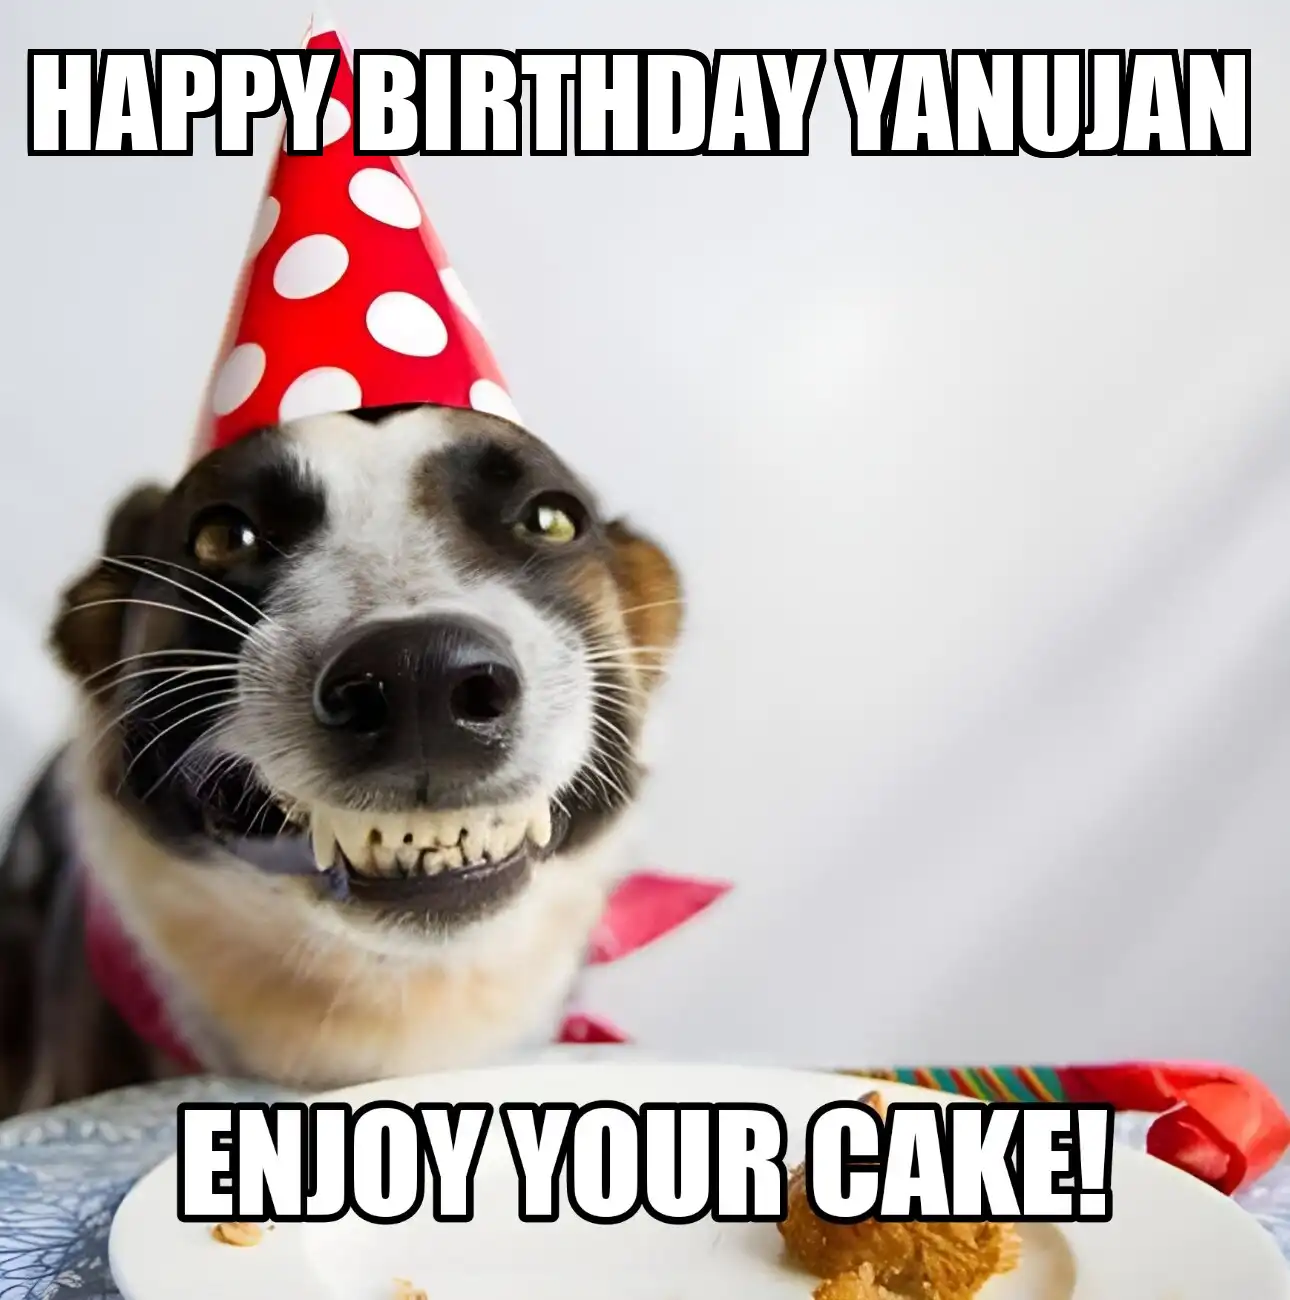 Happy Birthday Yanujan Enjoy Your Cake Dog Meme